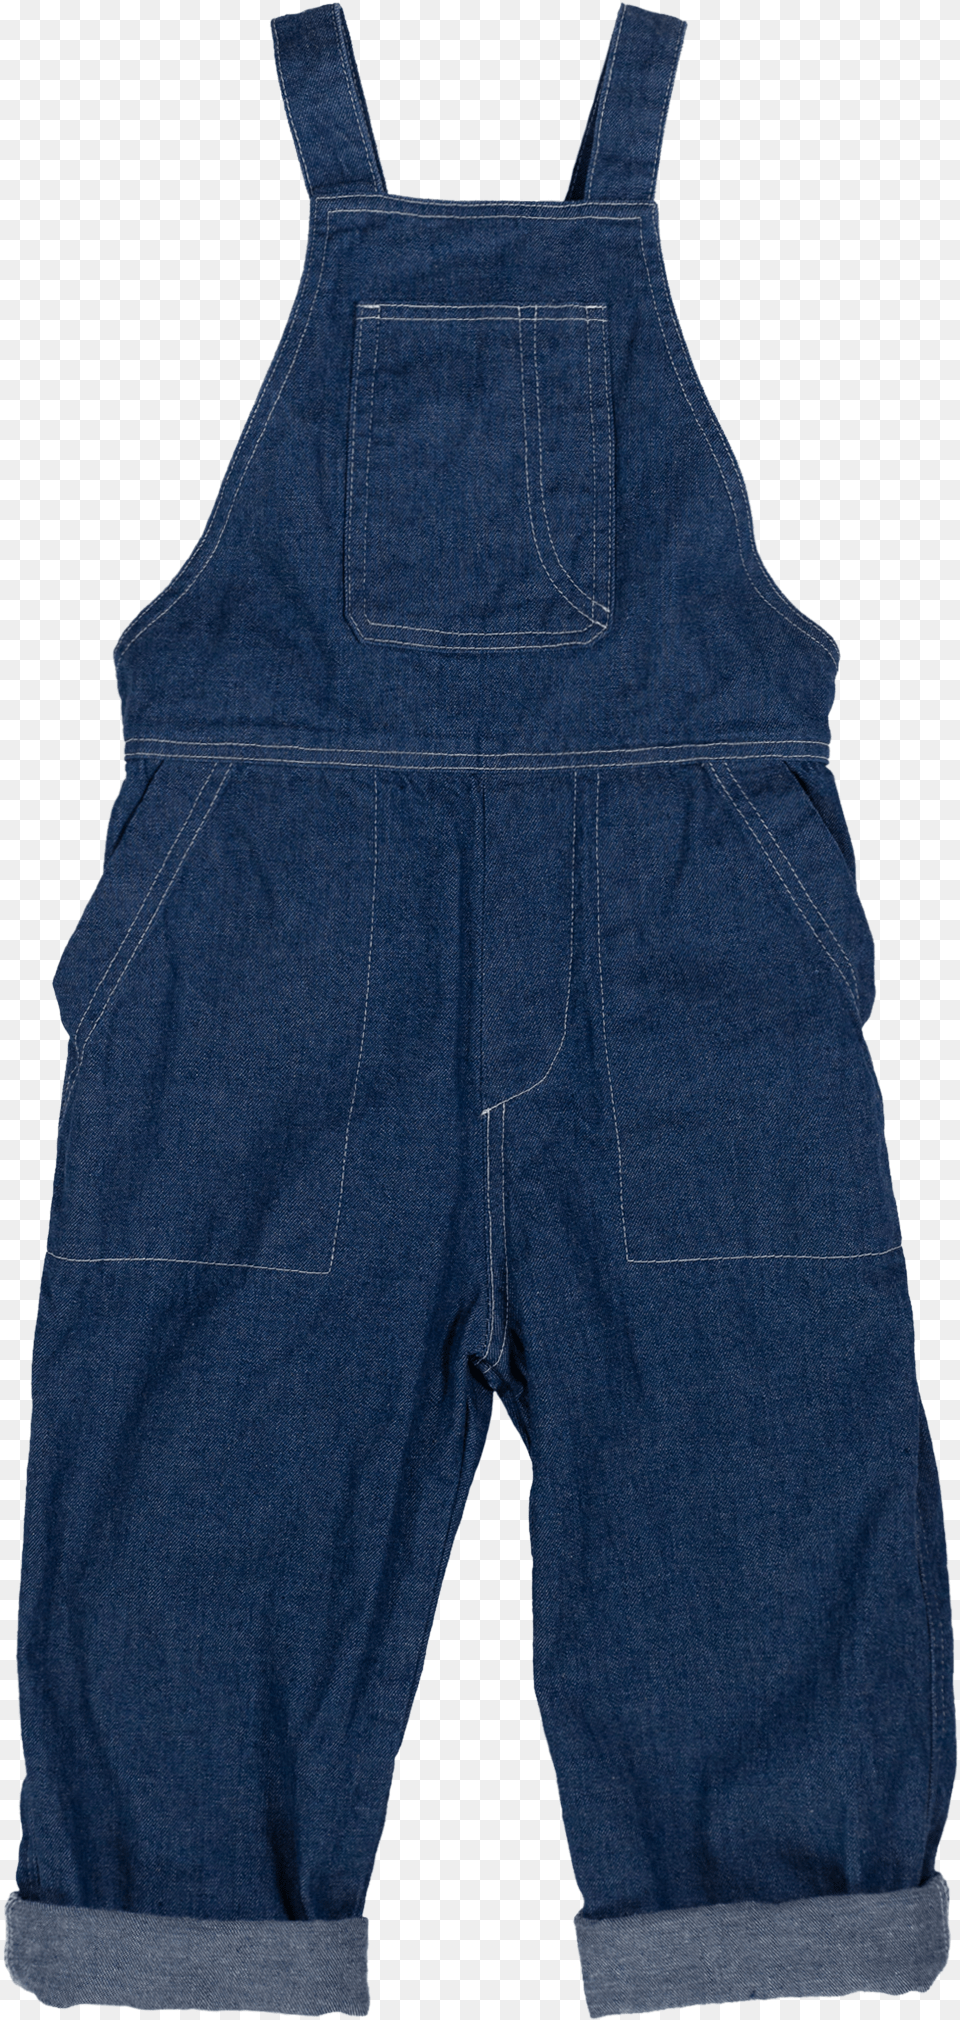 Japanese Denim Overalls Transparent Background Overalls Transparent, Clothing, Jeans, Pants Free Png Download